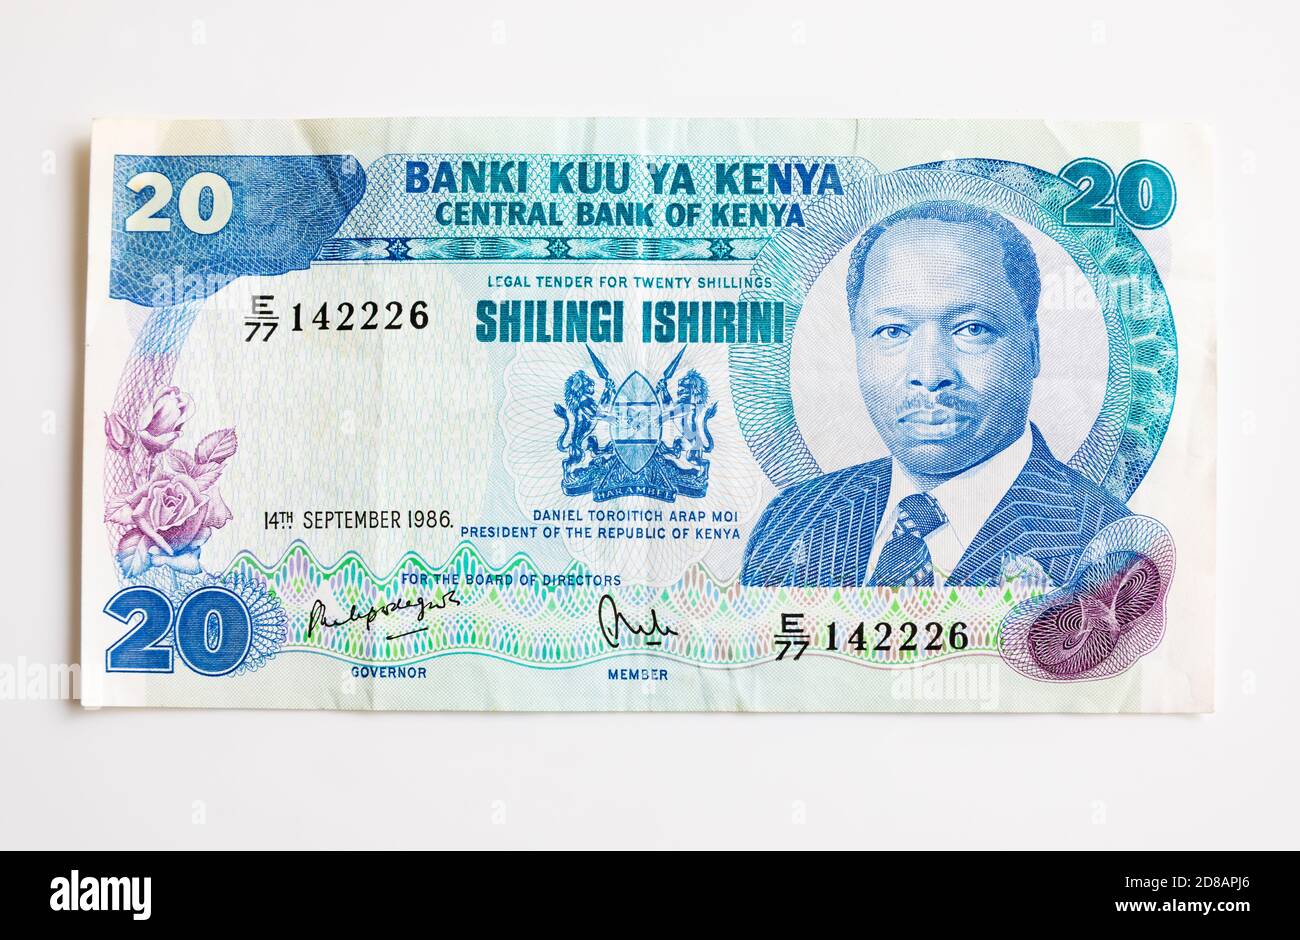 Zentralbank von Kenia, 20 Schilling Note mit Präsident Daniel Moi im Bild. Banki Kuu Ya Kenia. Stockfoto